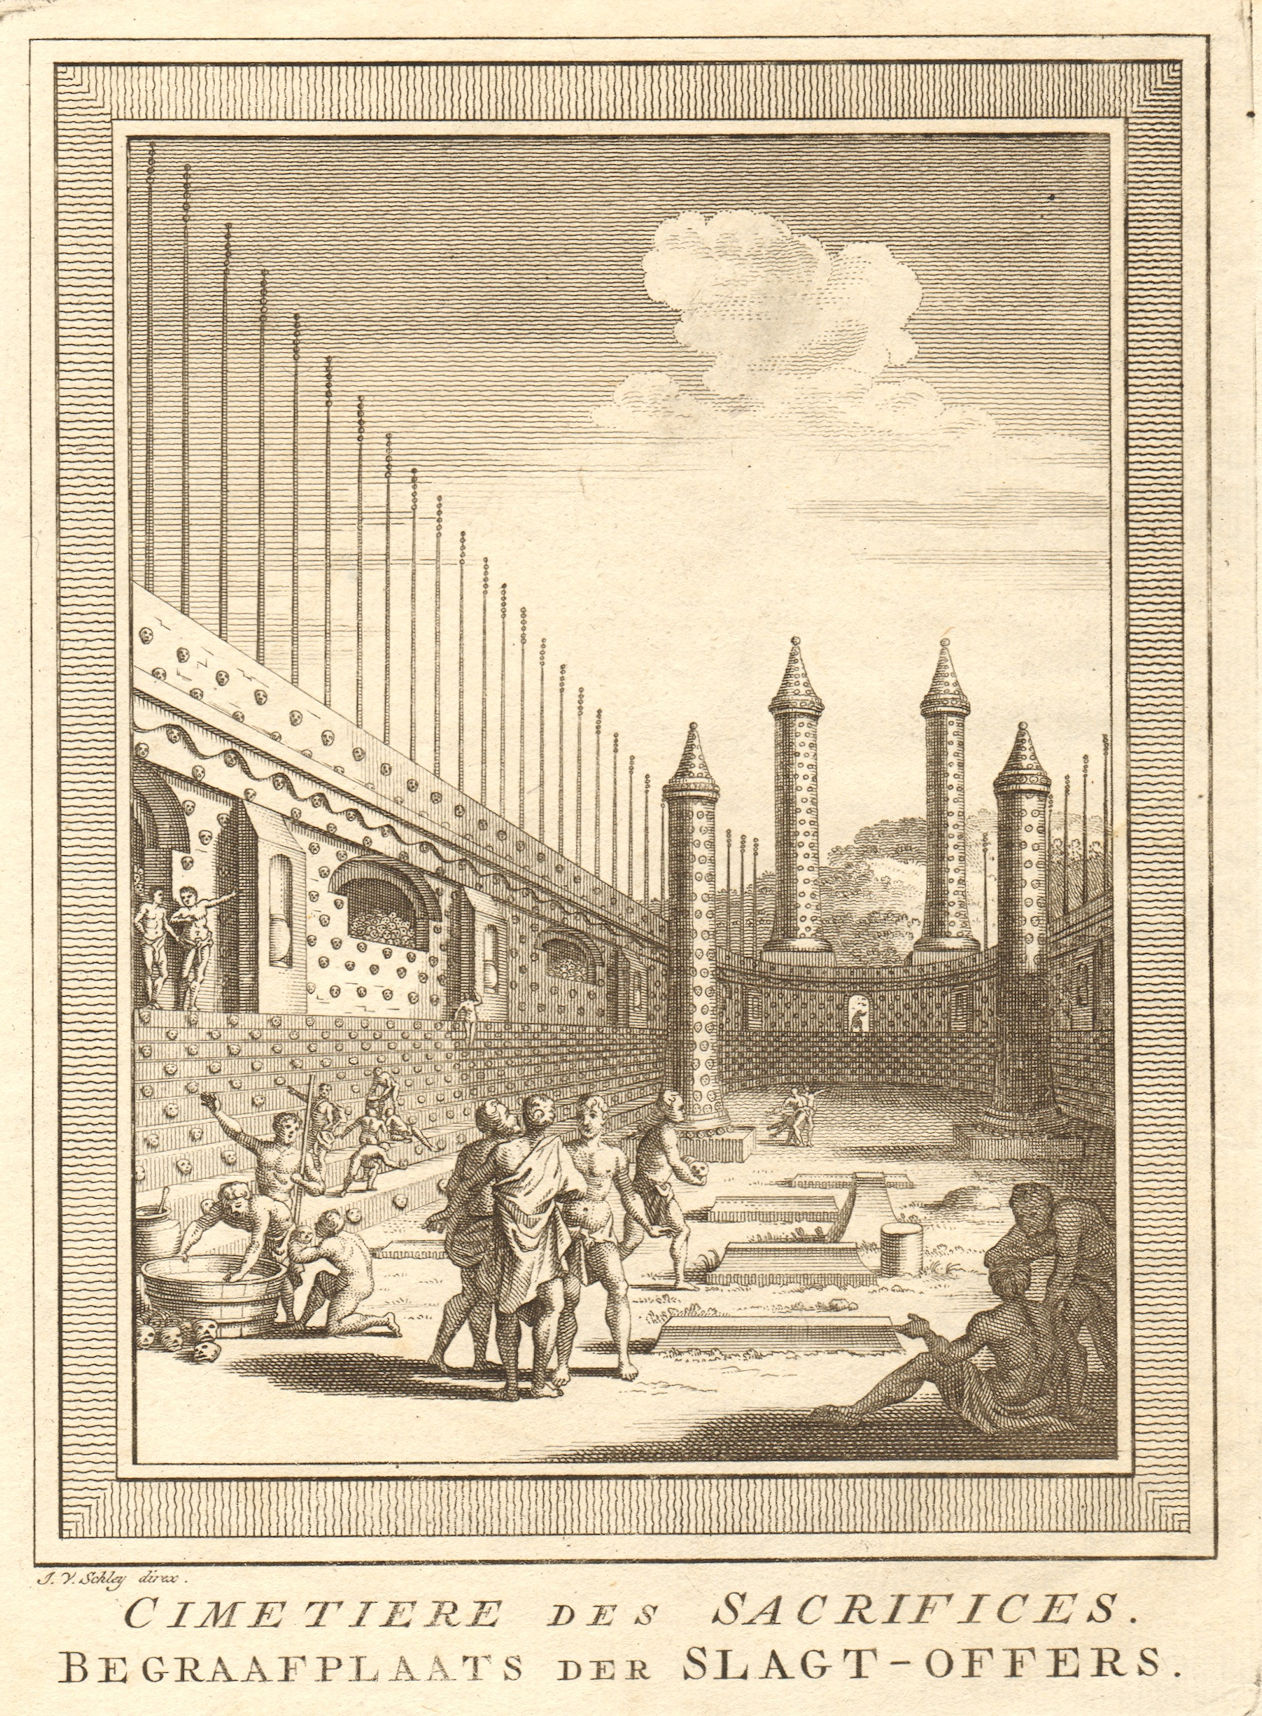 Associate Product Cimetière / Cemetery of Human Sacrifices, Tenochtitlan-Mexico City. SCHLEY 1762